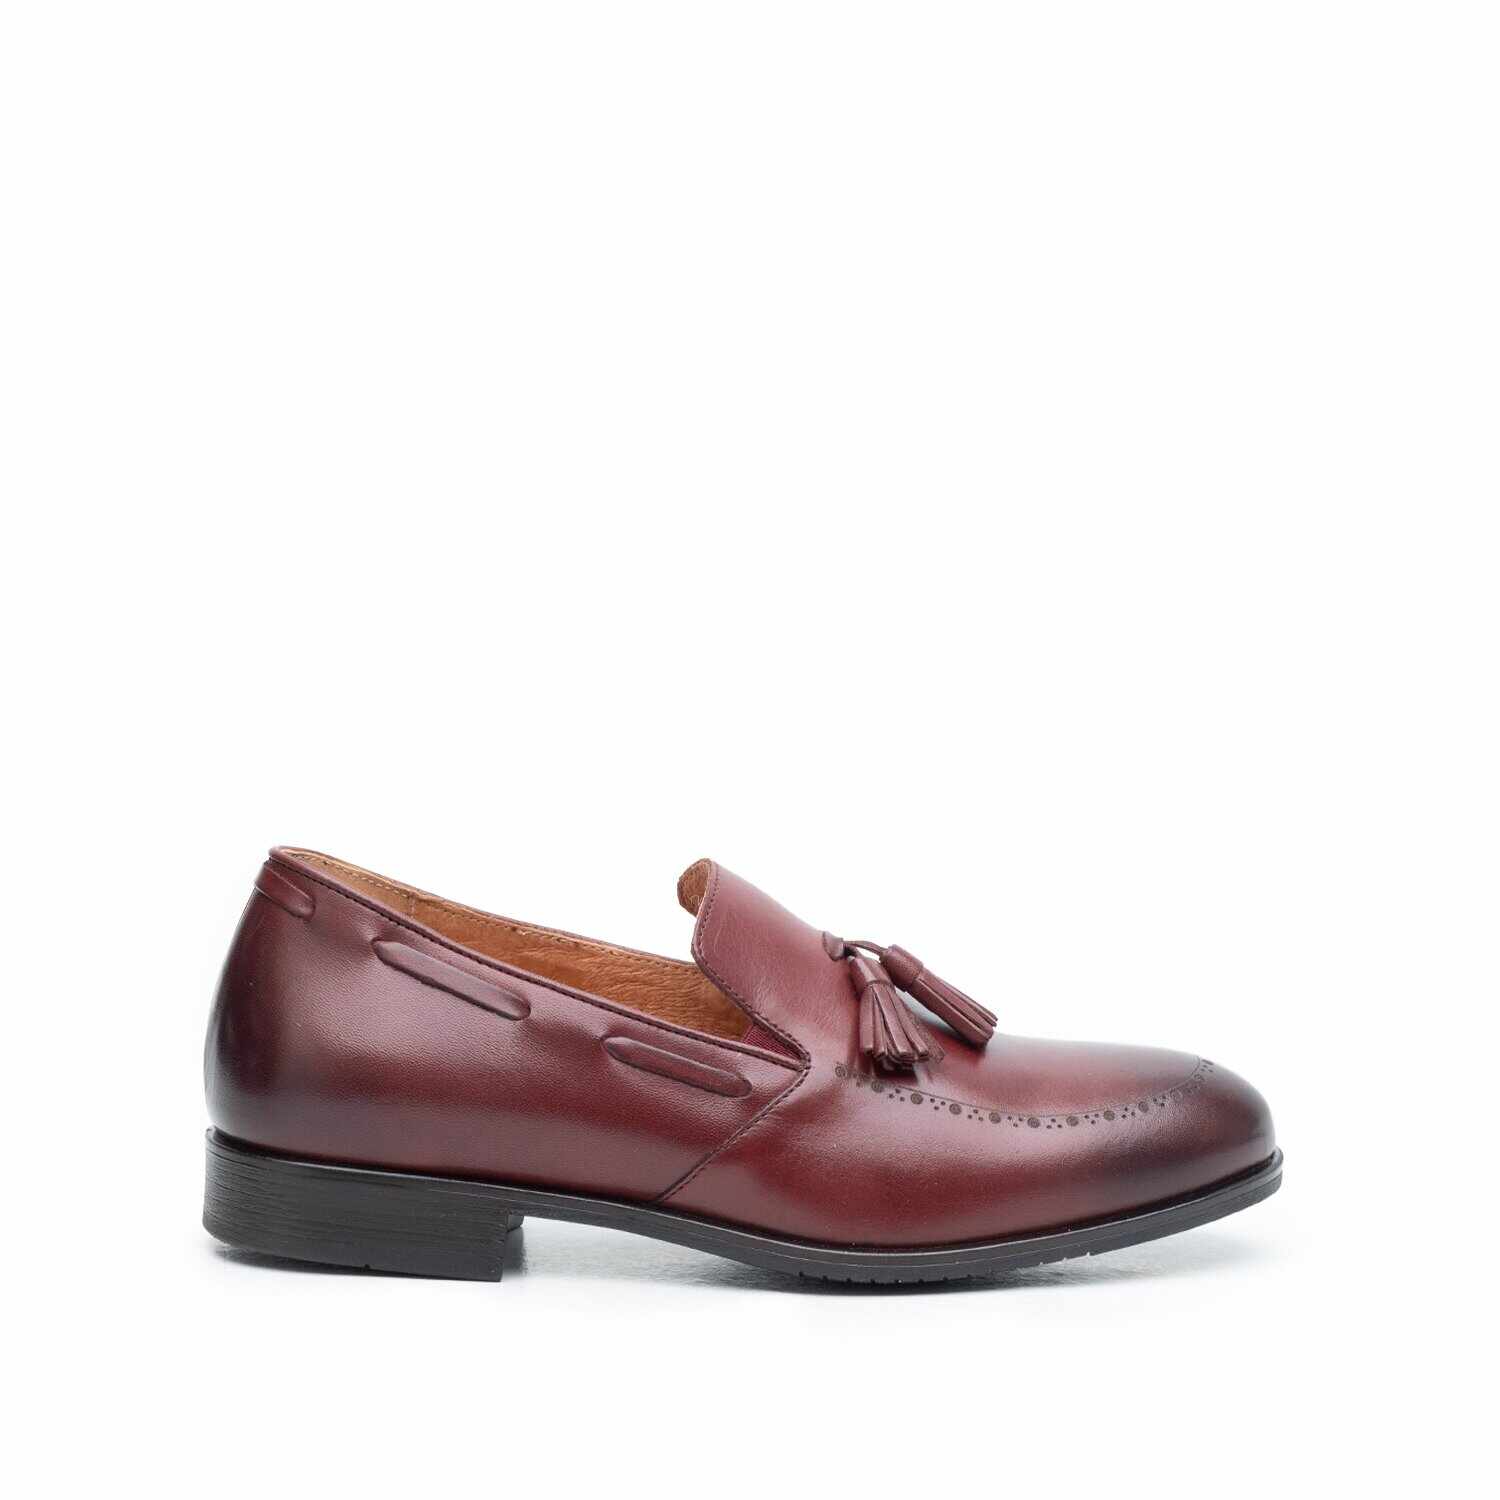 Pantofi eleganti barbati din piele naturala, Leofex - 515 Visiniu Box